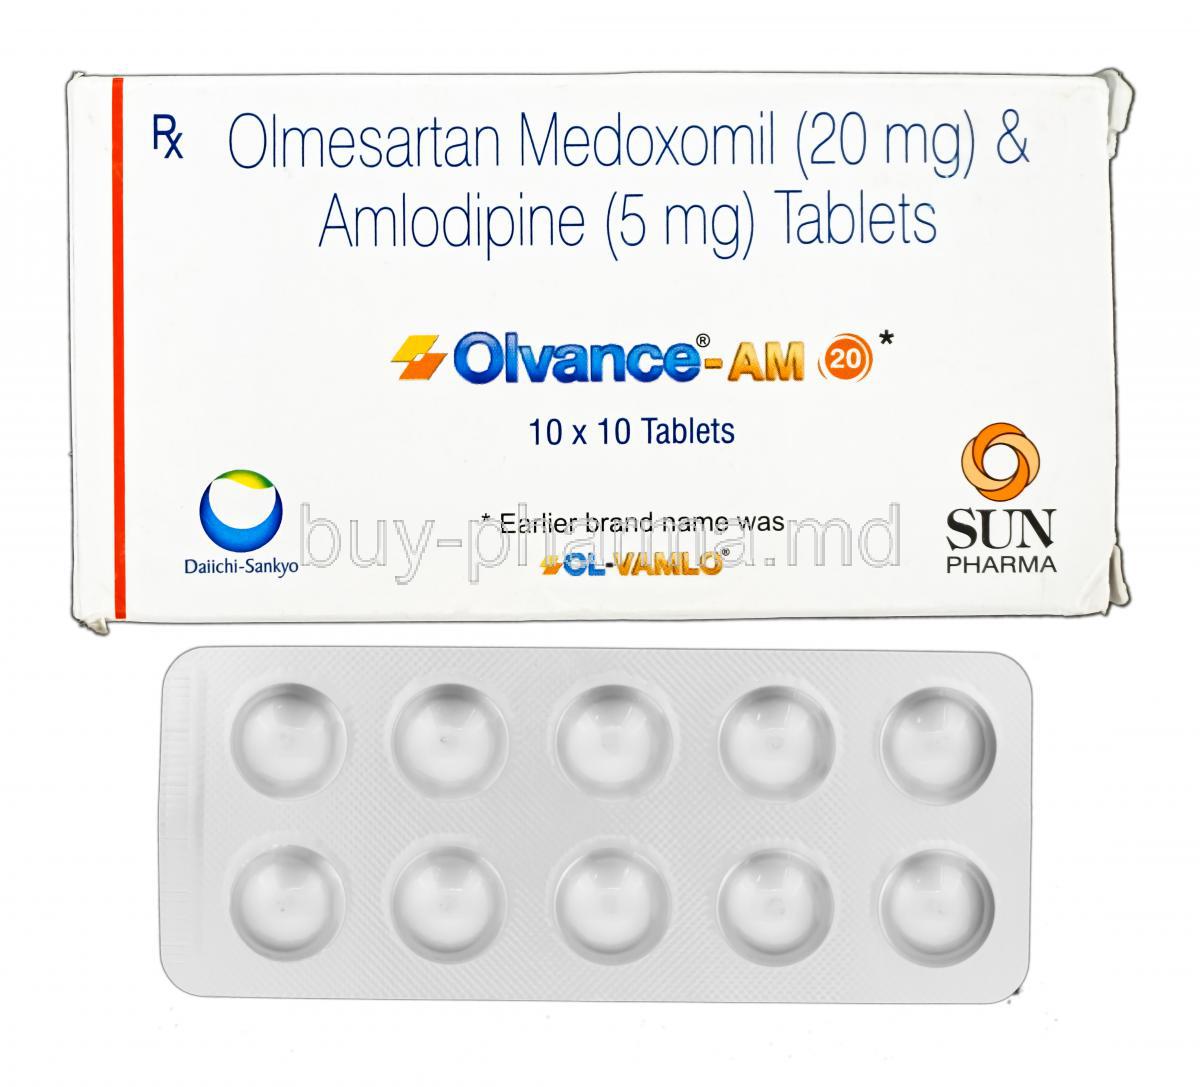 Olvance-AM, Ol-Vamlo, Generic Benicar Norvasc Olmesartan 20 mg Amlodipine 5 mg